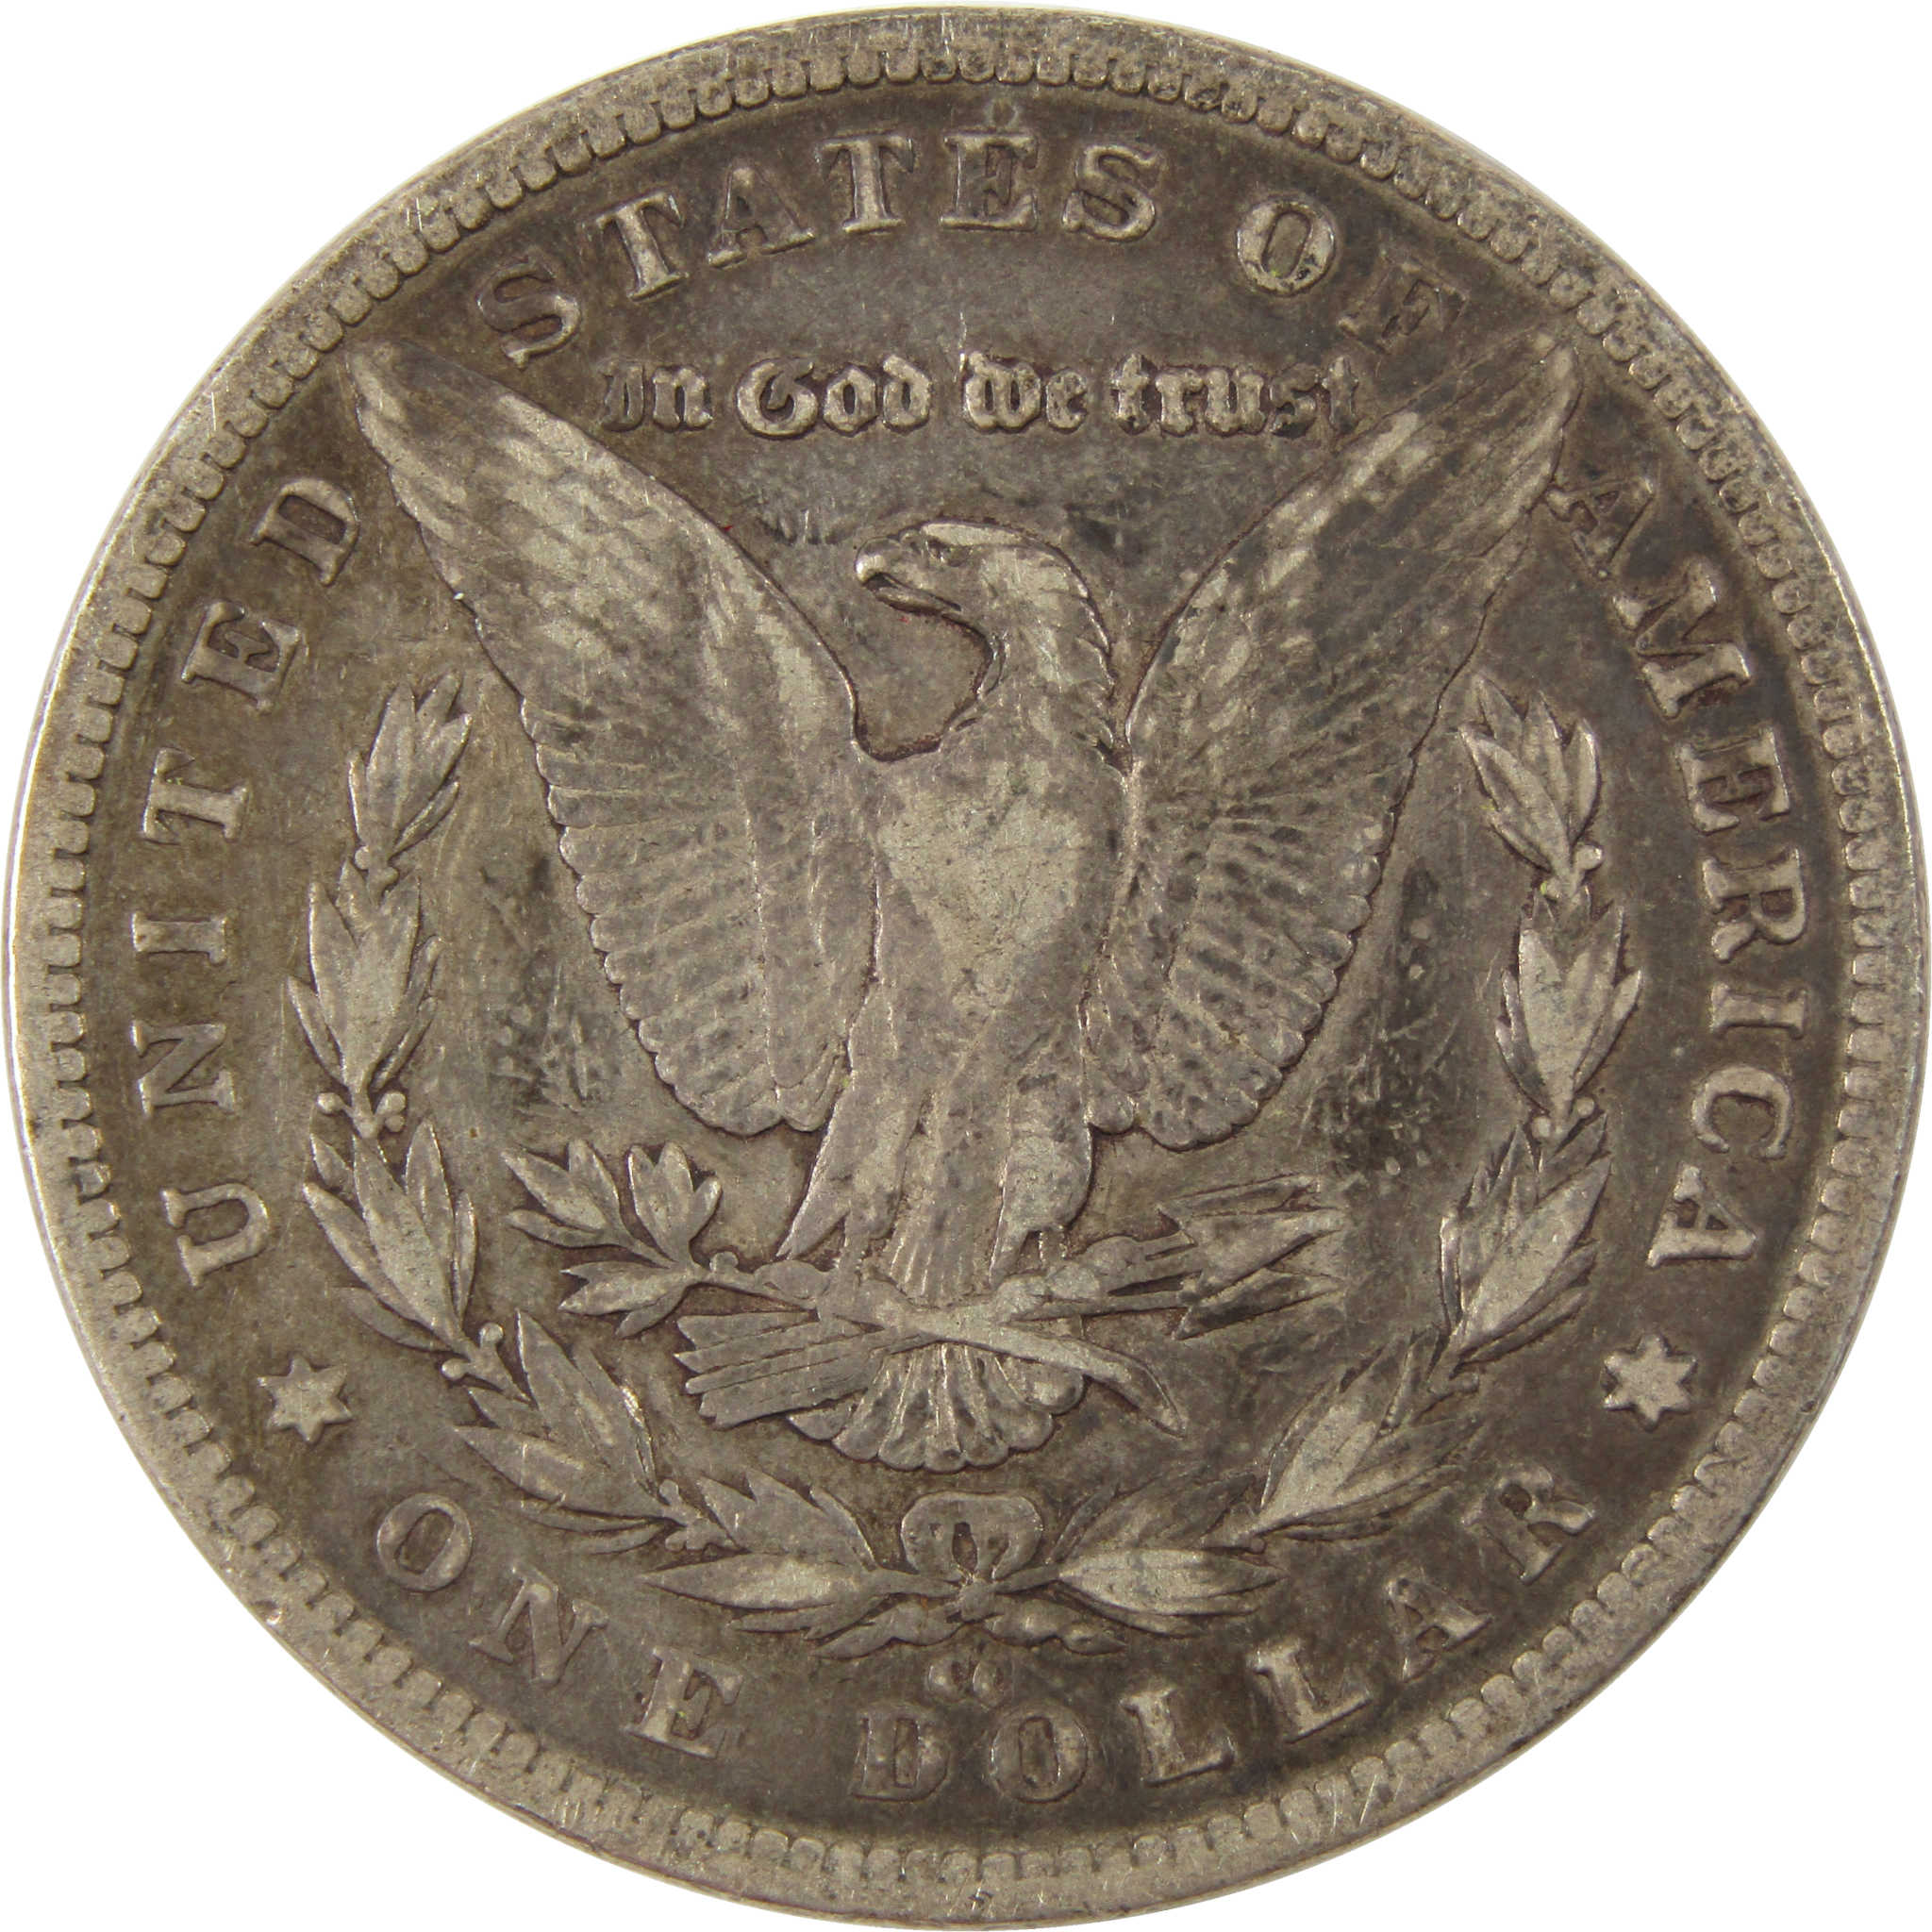 1892 CC Morgan Dollar F Fine 90% Silver $1 Coin SKU:I8053 - Morgan coin - Morgan silver dollar - Morgan silver dollar for sale - Profile Coins &amp; Collectibles